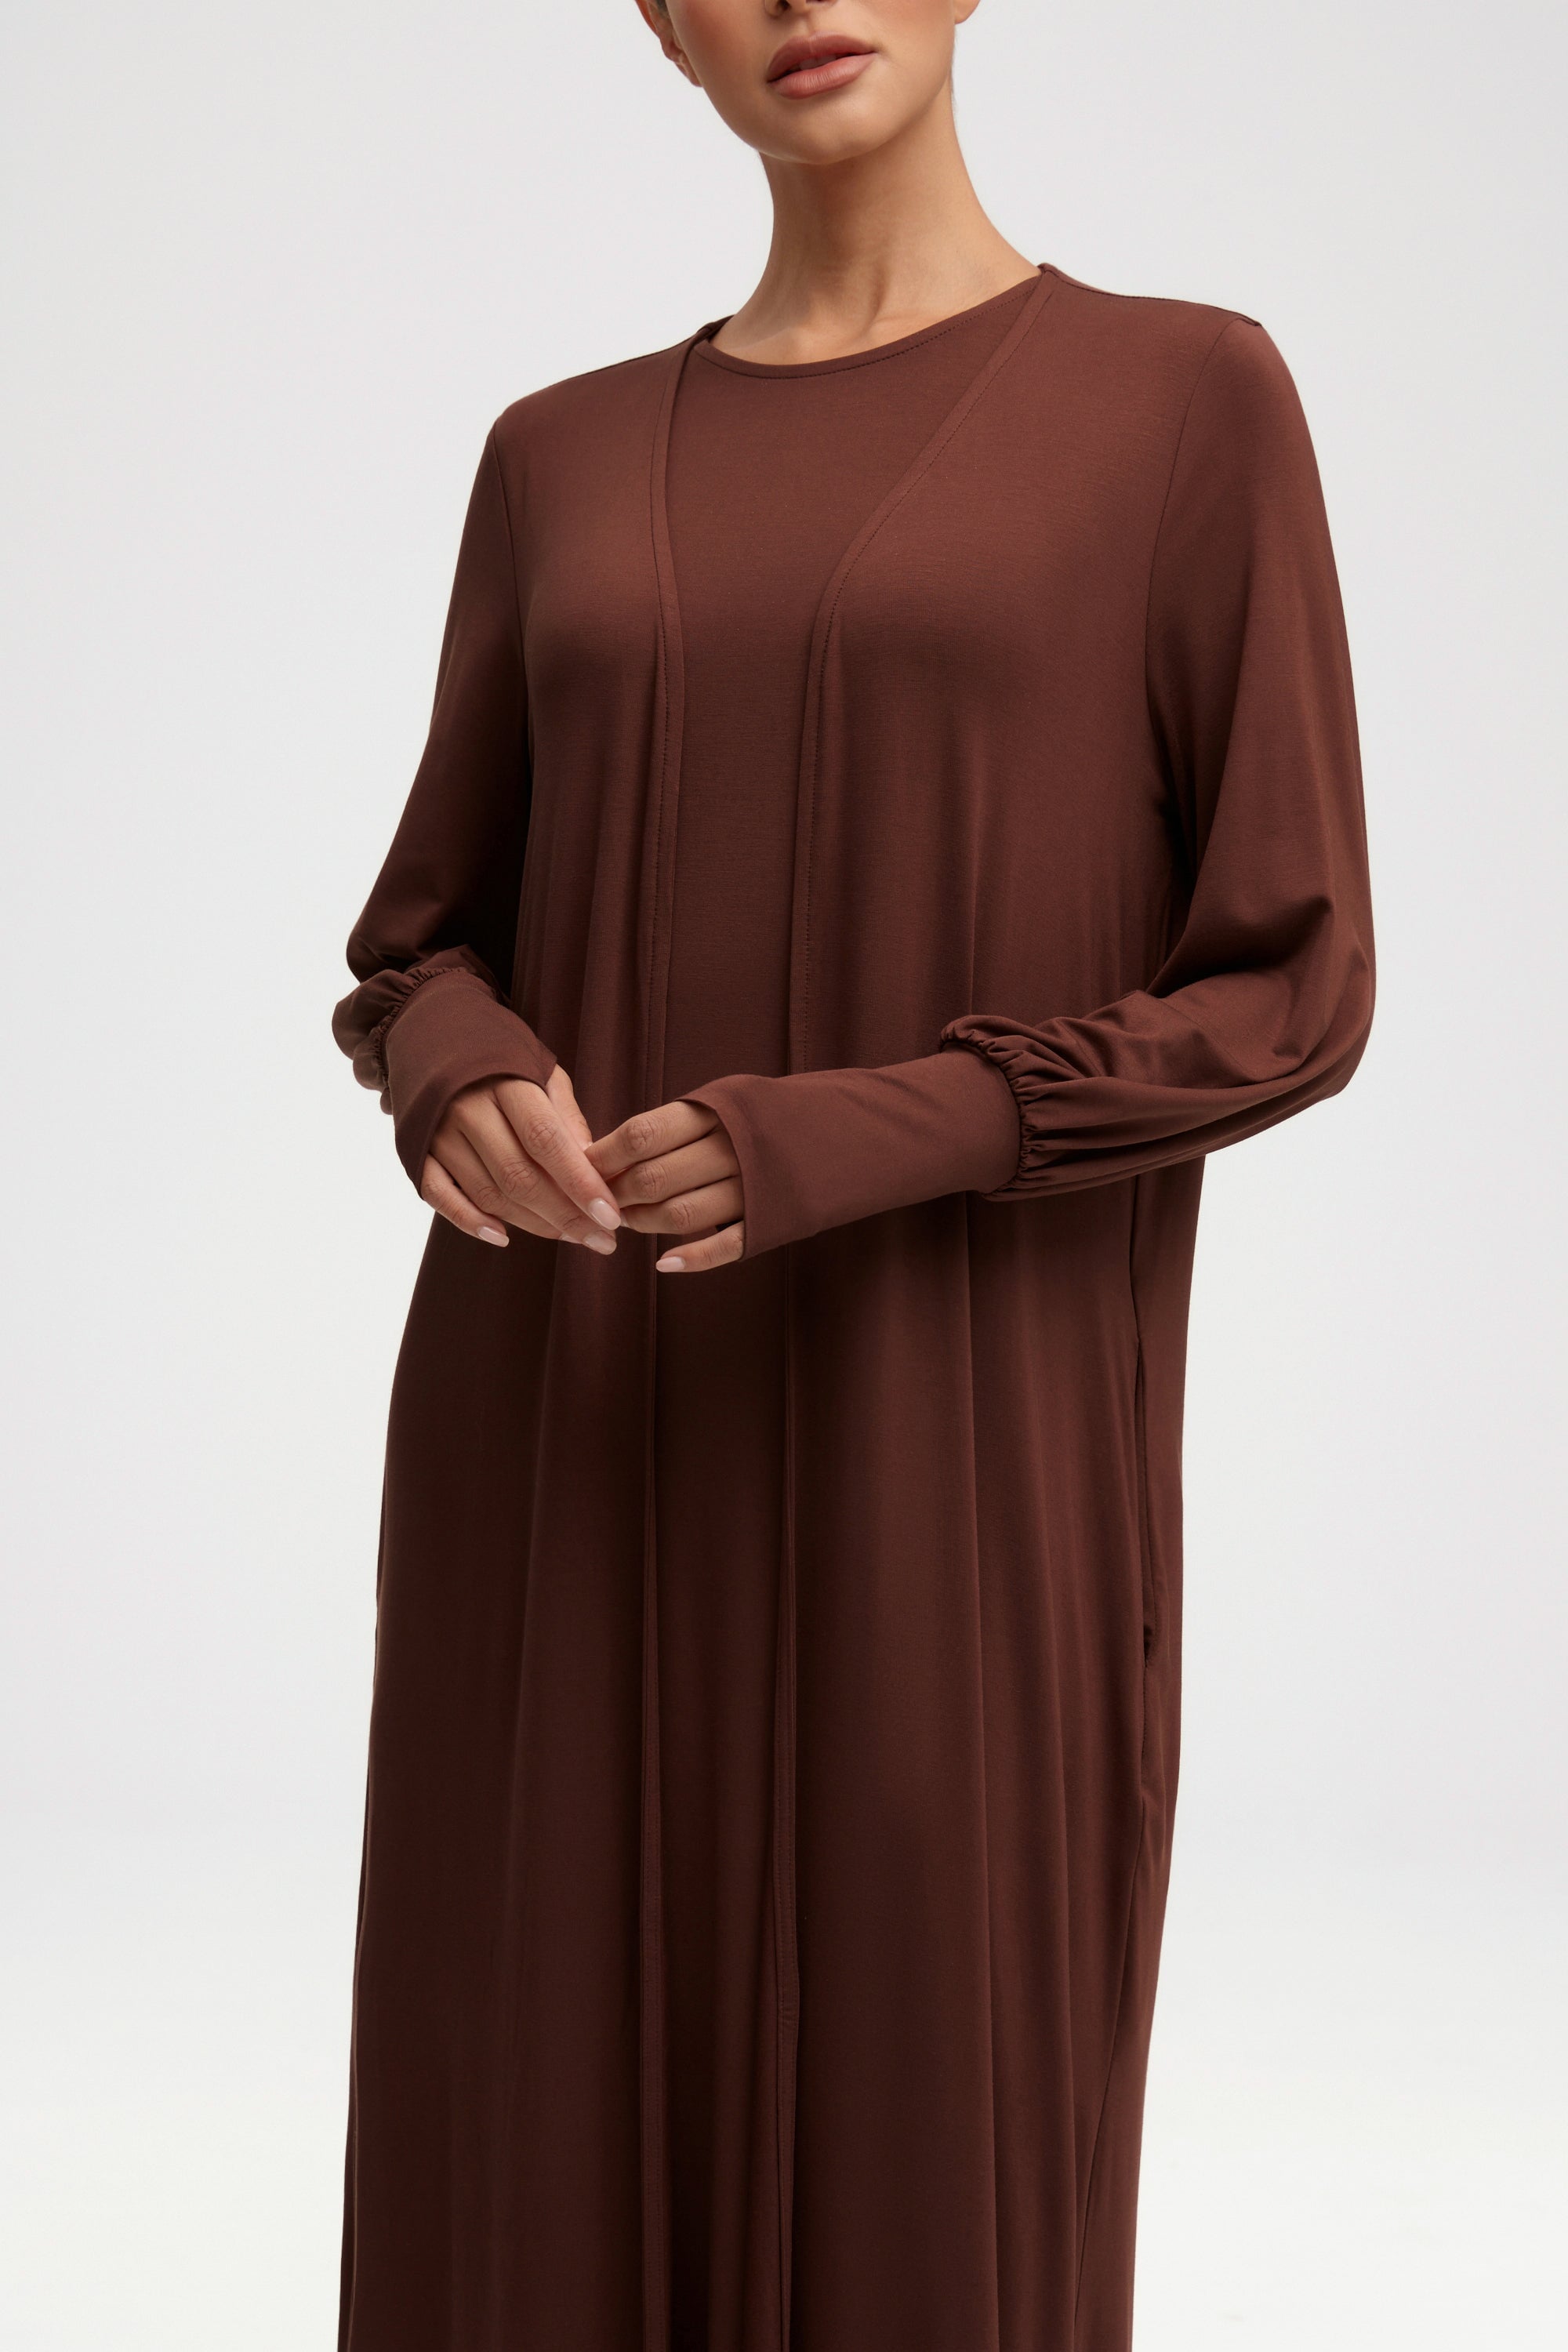 Jenin Jersey Open Abaya & Maxi Dress Set - Chocolate Clothing Veiled 